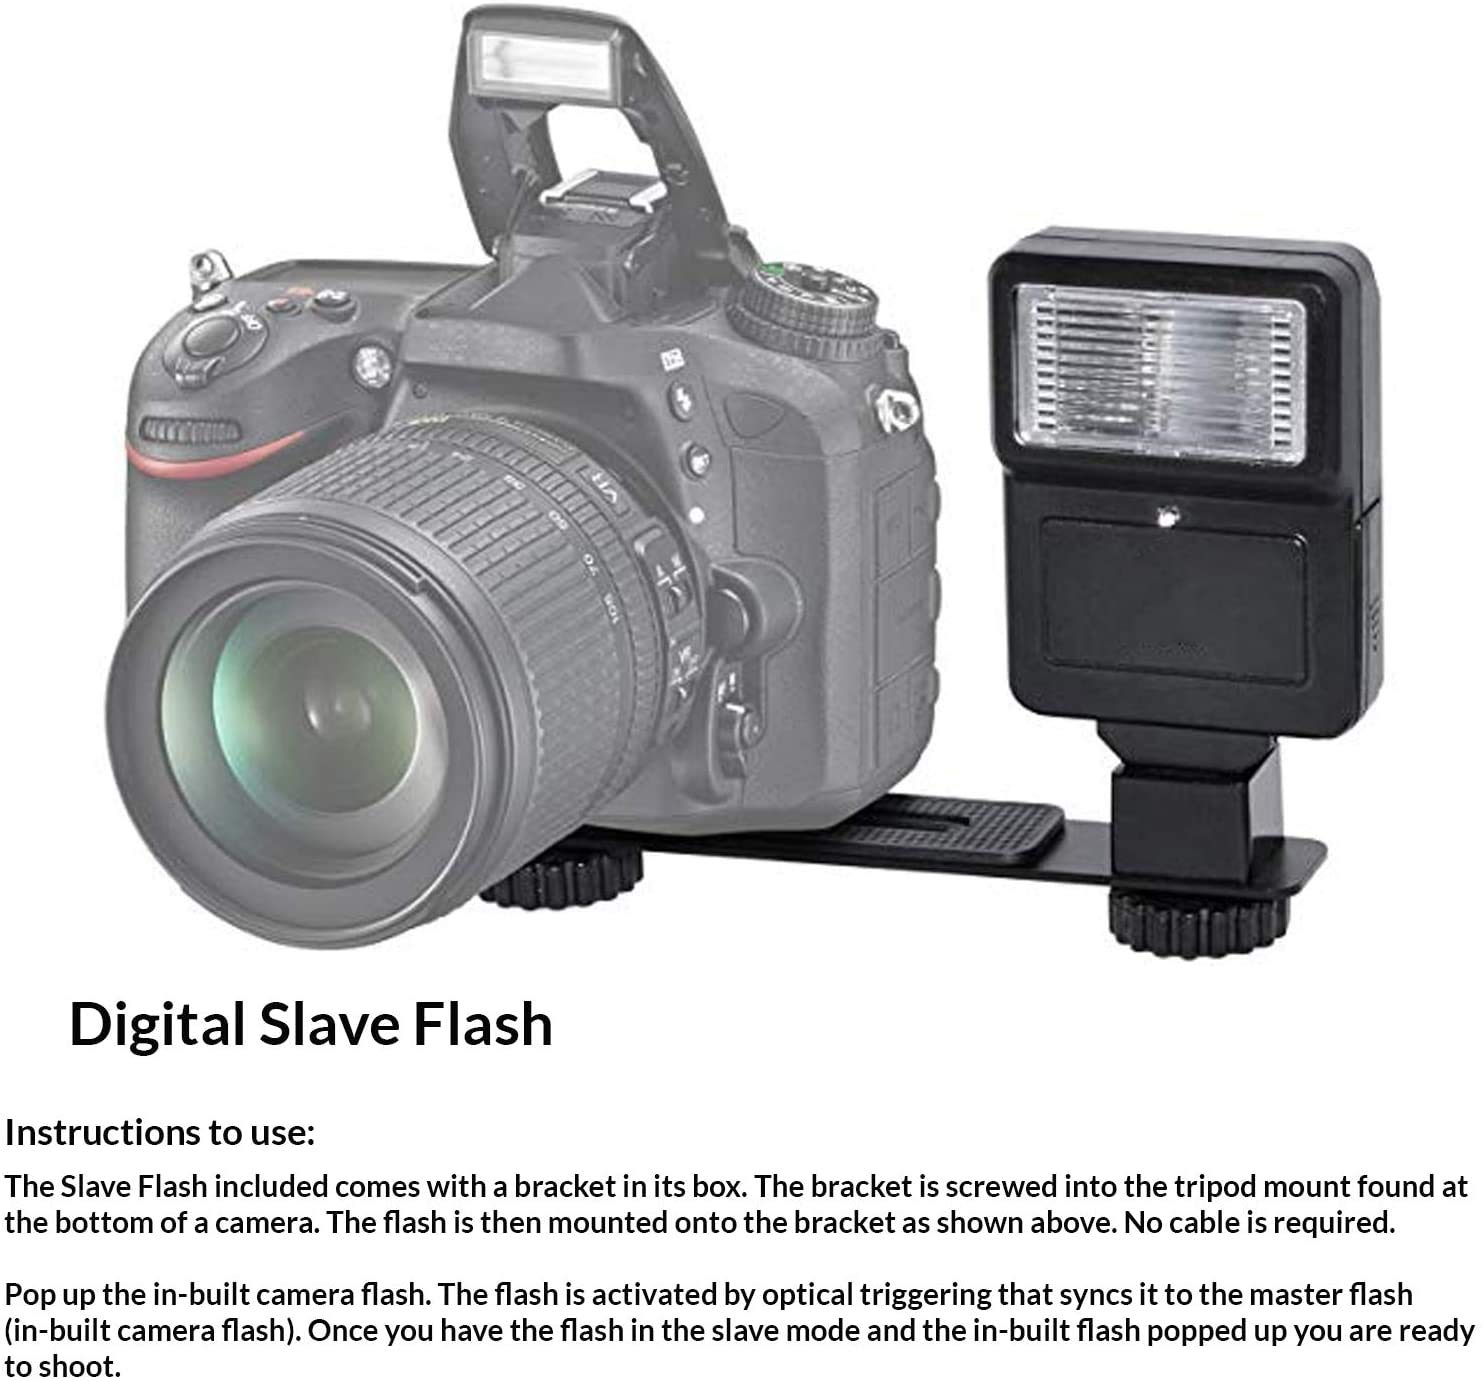 Camera EOS 4000D DSLR (Rebel T100) W/ 18-55mm Zoon Lens Kit |18 Megapixels CMOS | HD Video + Wide Angle Lens + Telephoto Lens, 64GB Memory, 3PC Filter Kit, Case, Tripod + More (31PC Bundle)